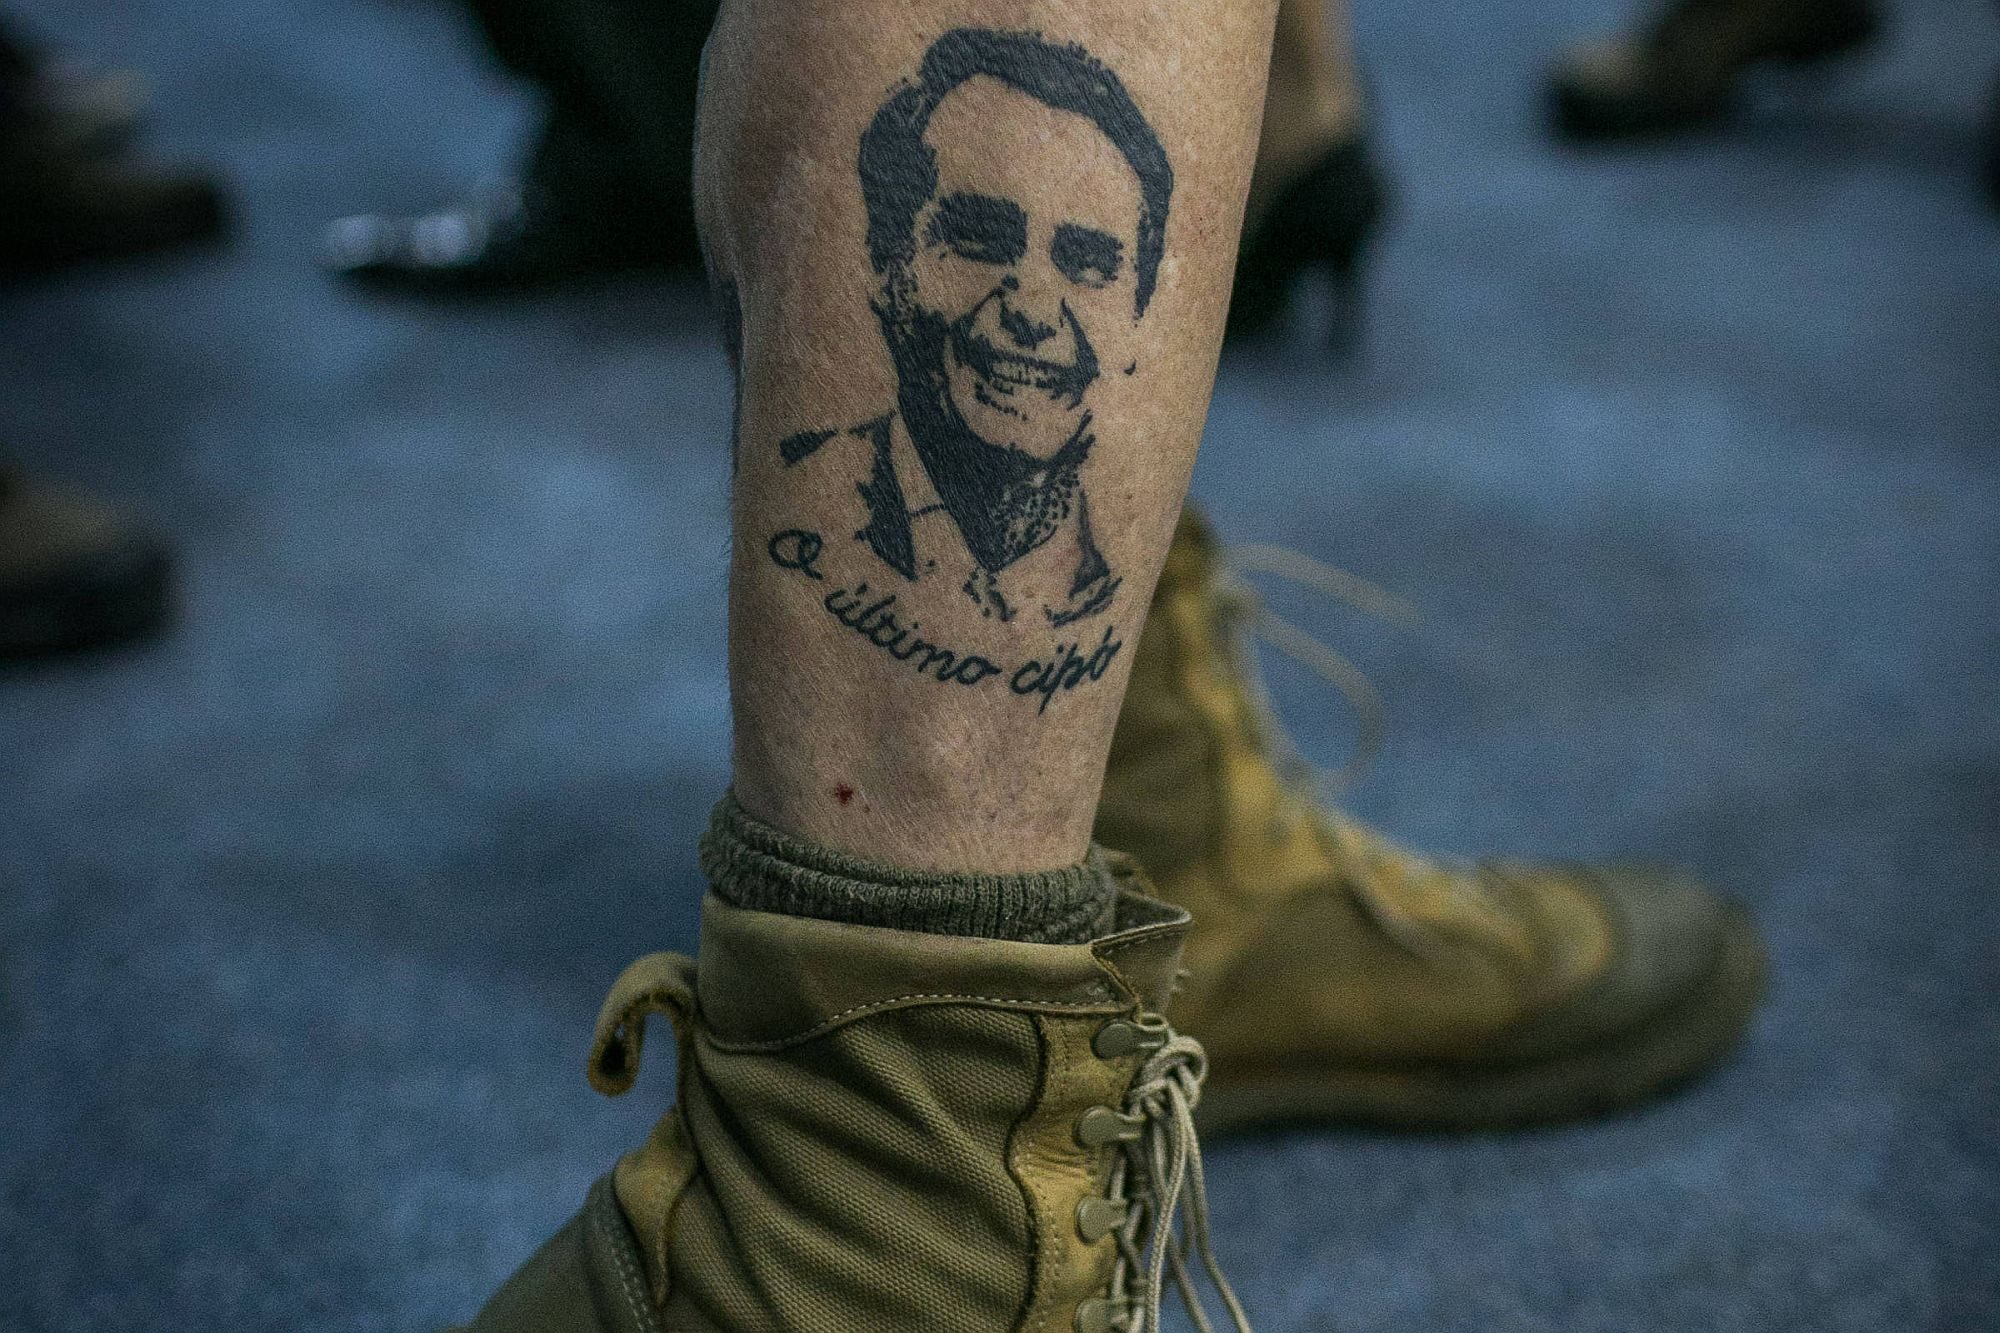 Tattoo revealing love for Brazilian president Jair Bolsonaro